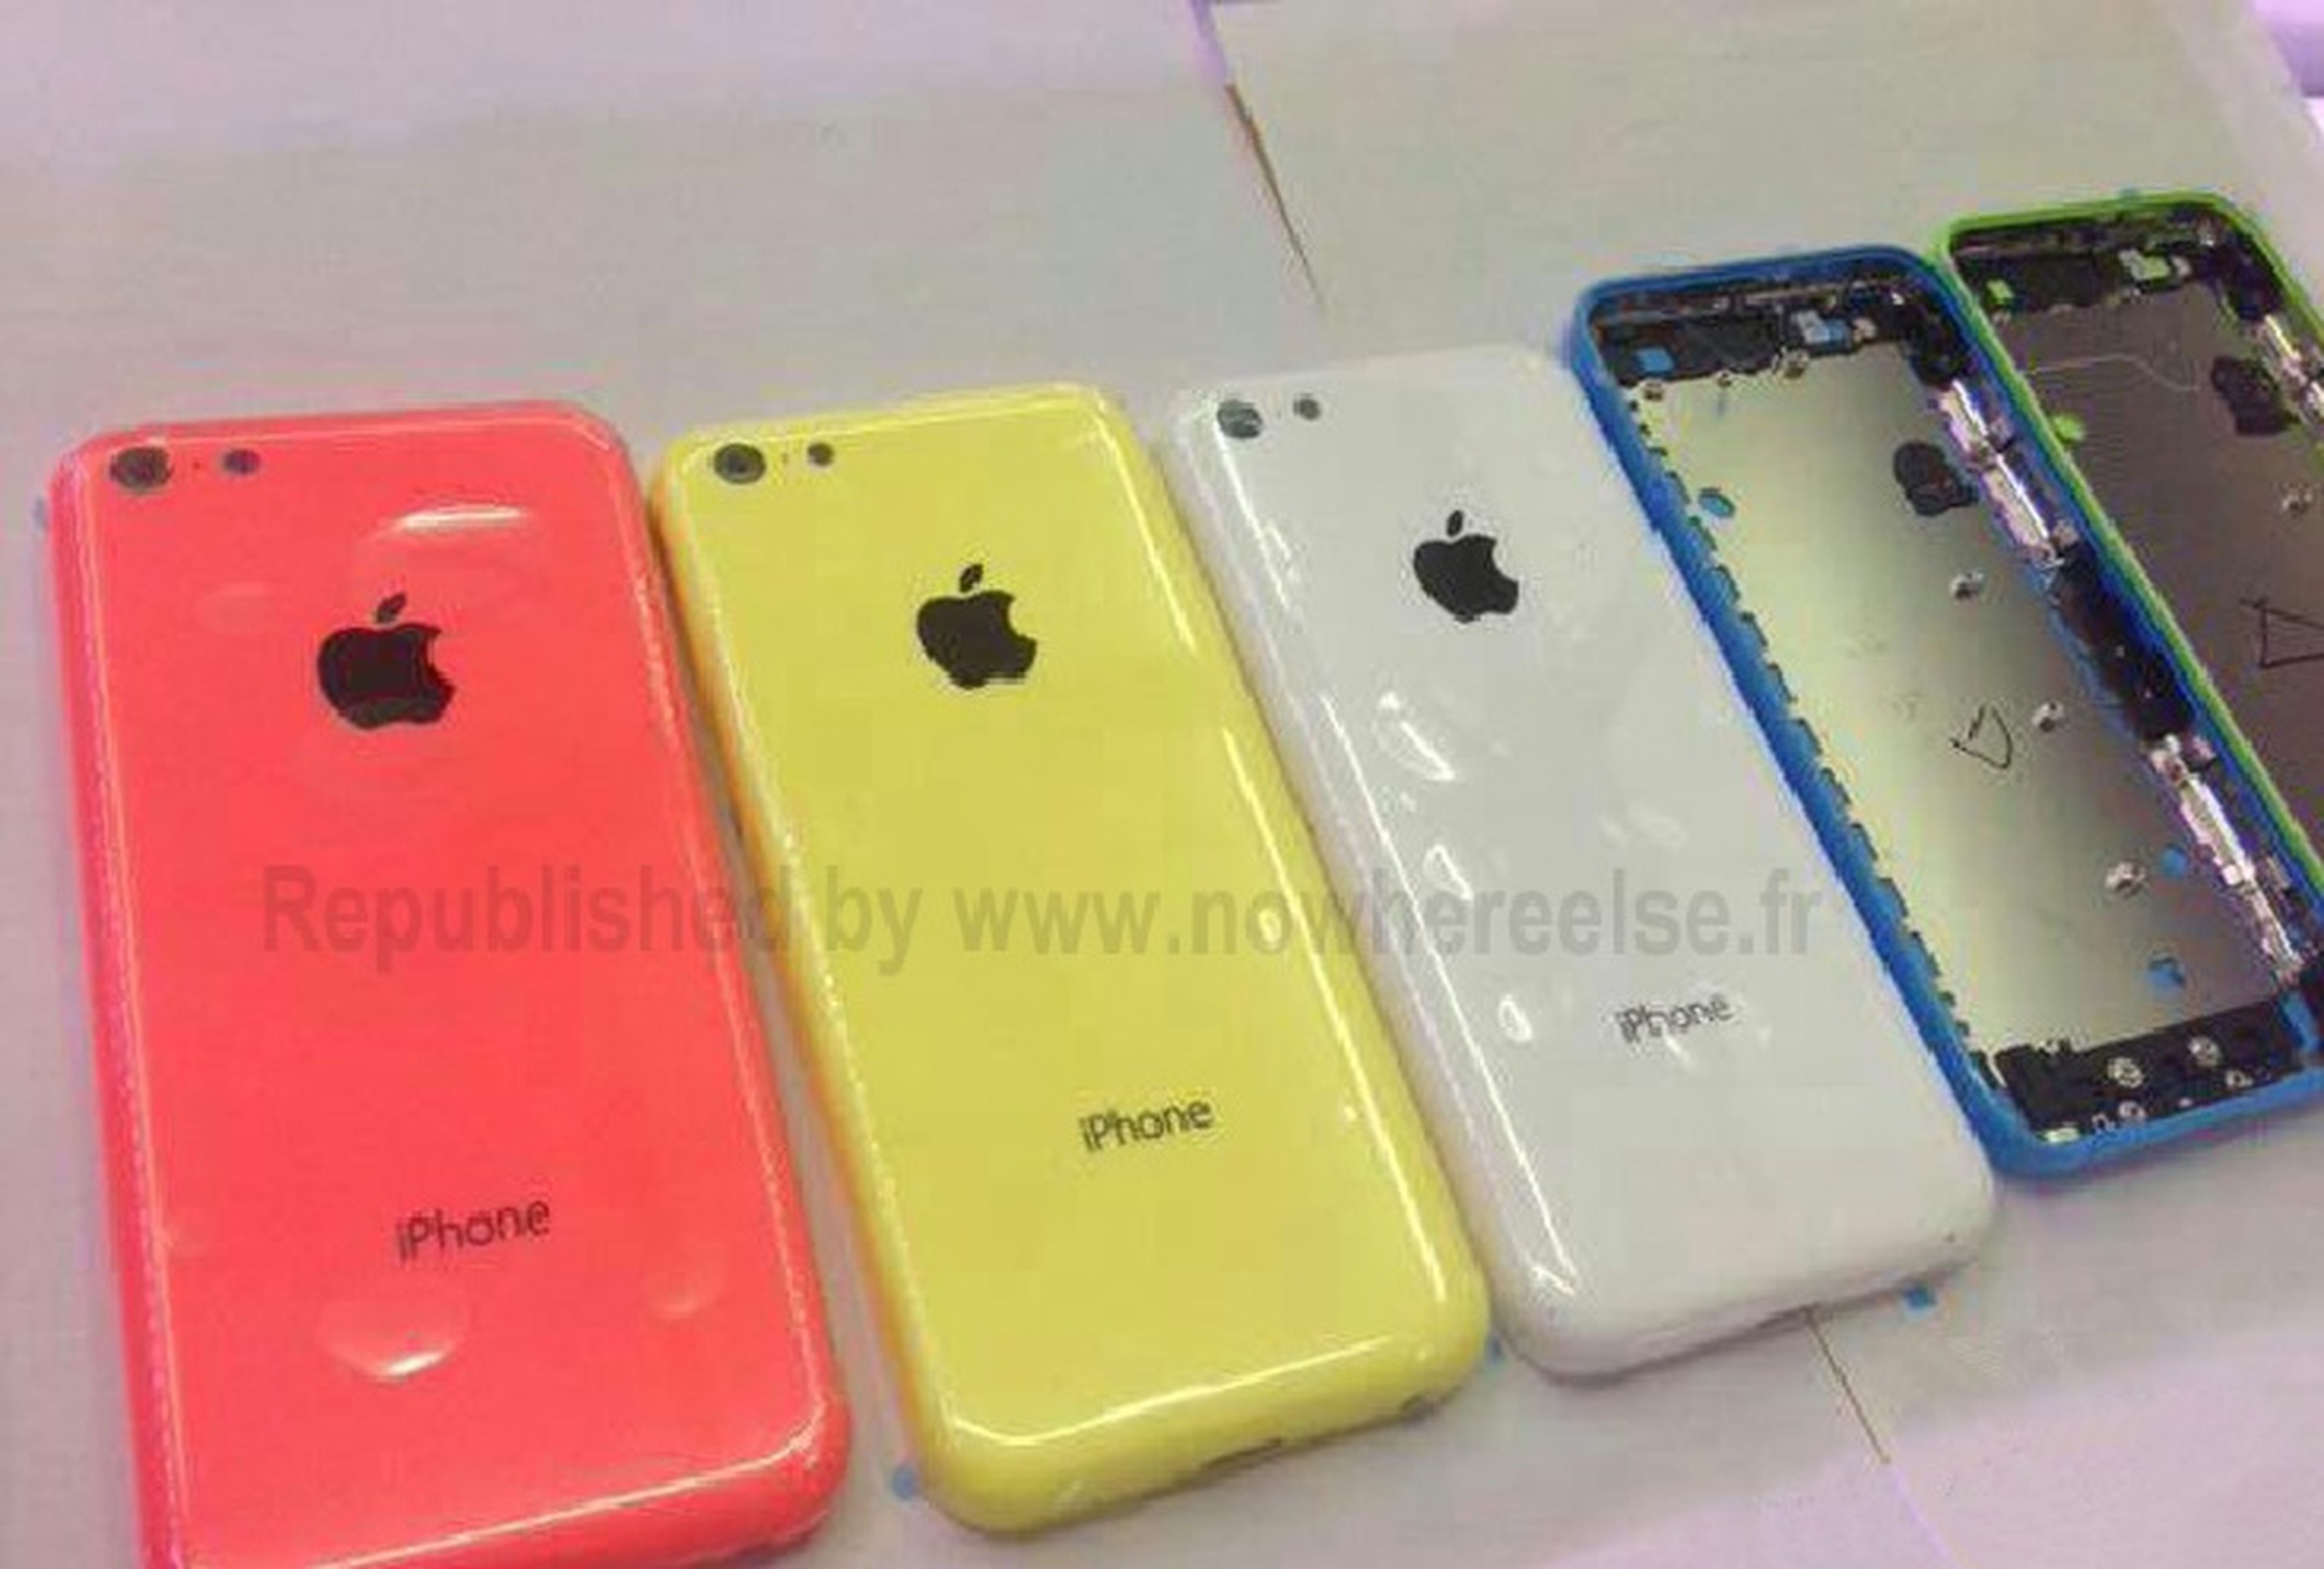 Confirmado desde China el iPhone 5C o iPhone low cost